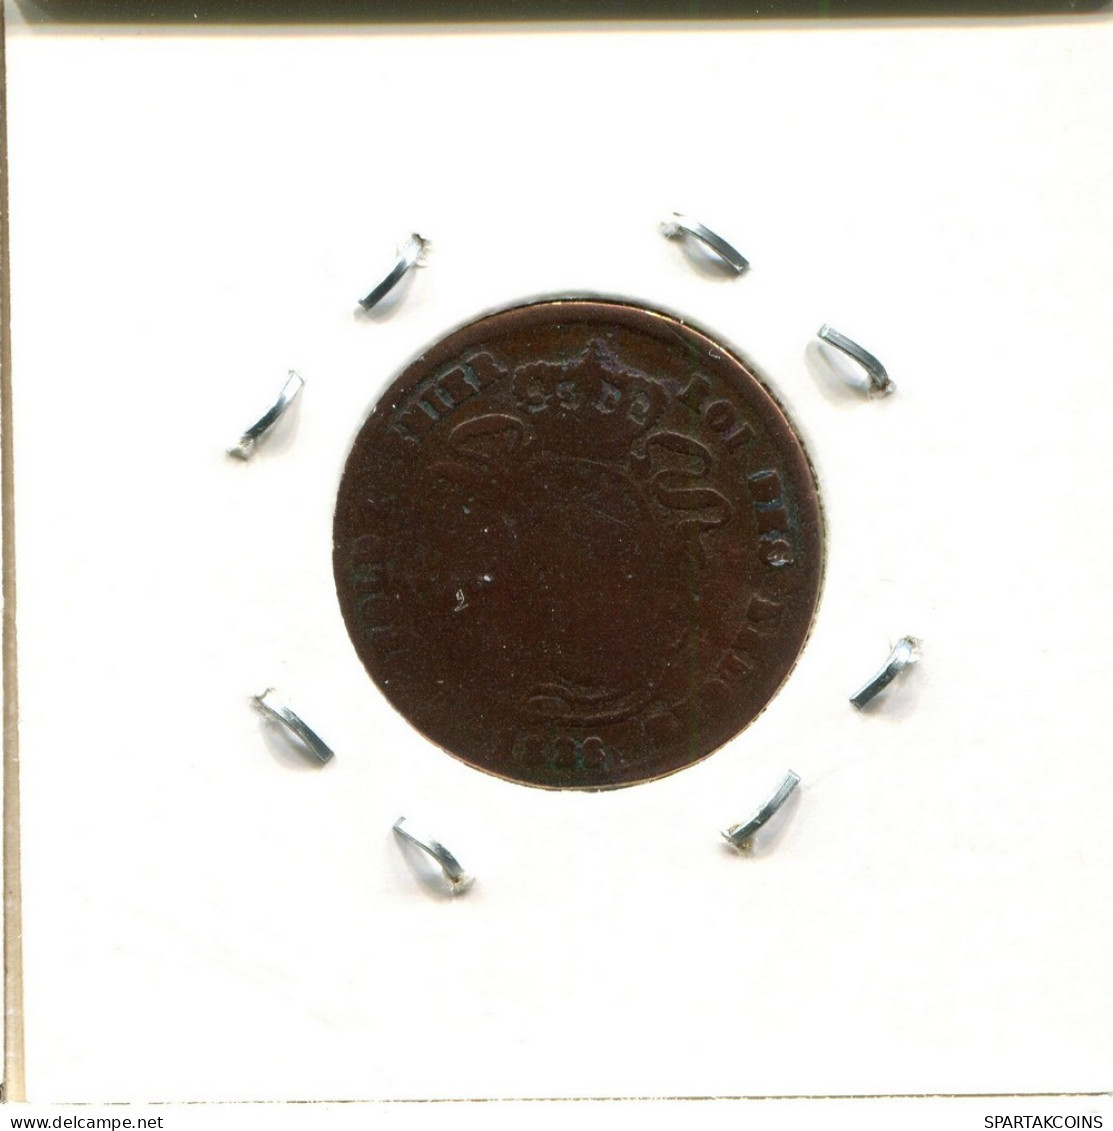 2 CENTIMES 1886 BELGIEN BELGIUM Münze #BA229.D.A - 2 Cent